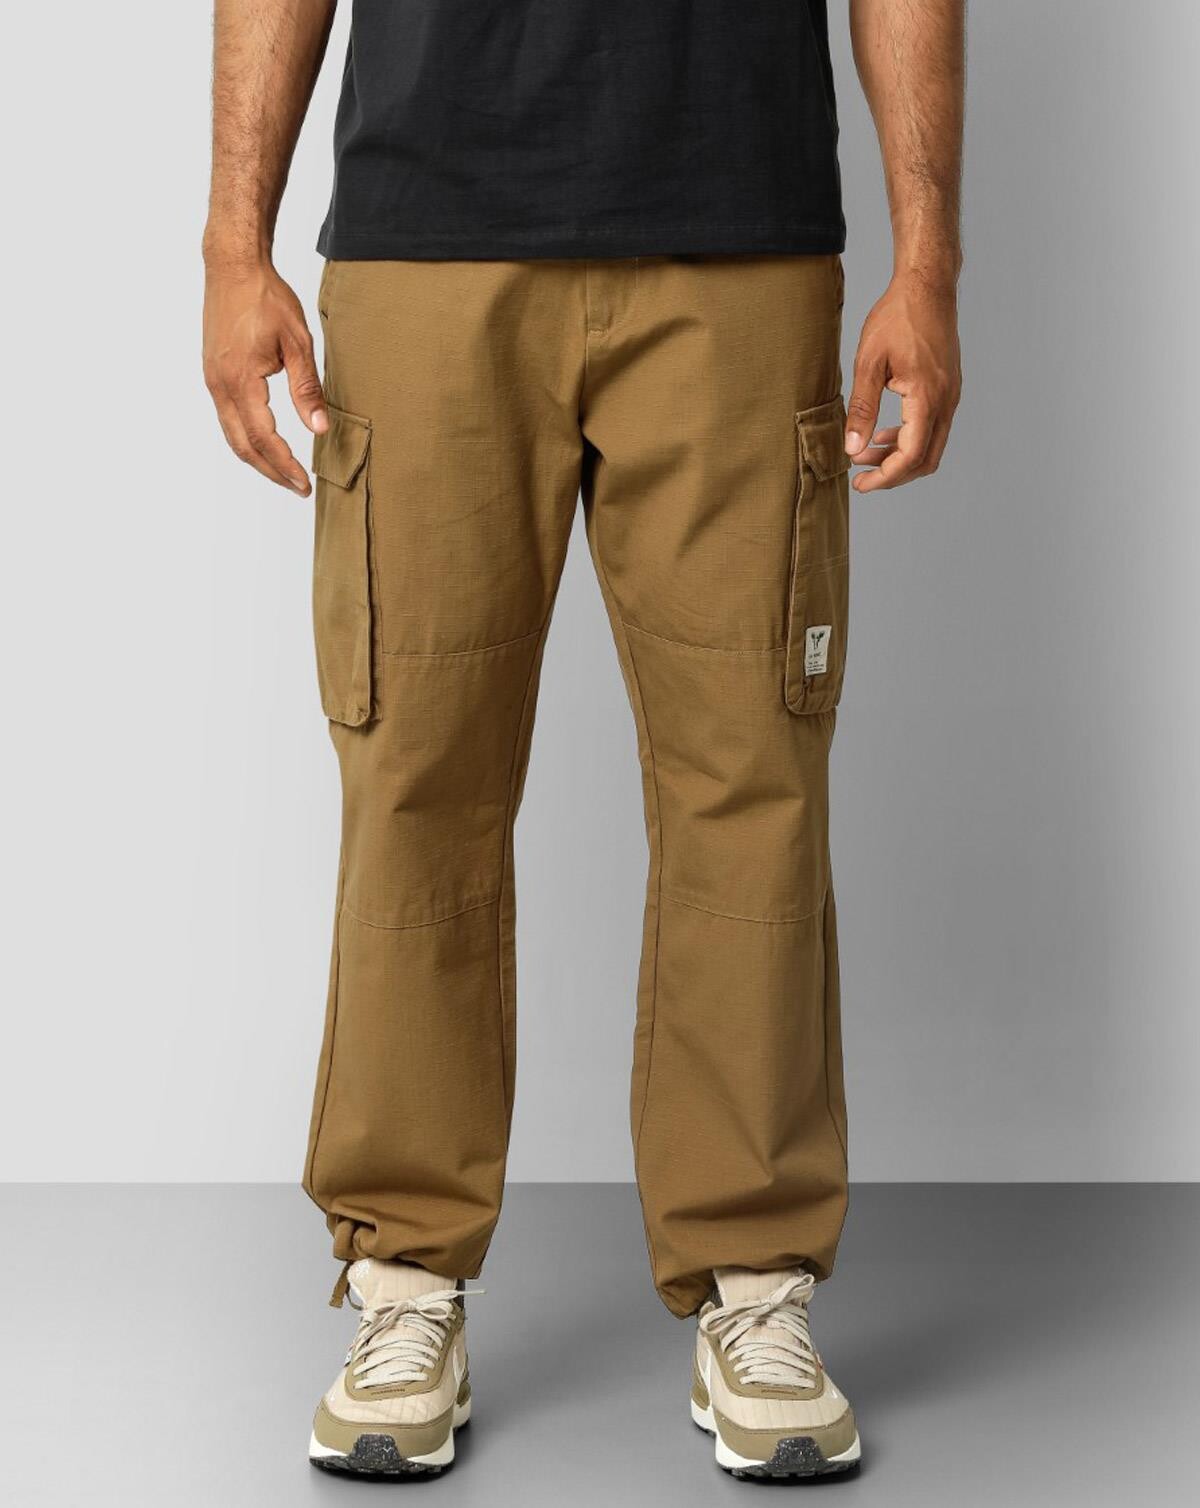 Fat Moose Tap Cargo Pants (Khaki, M)